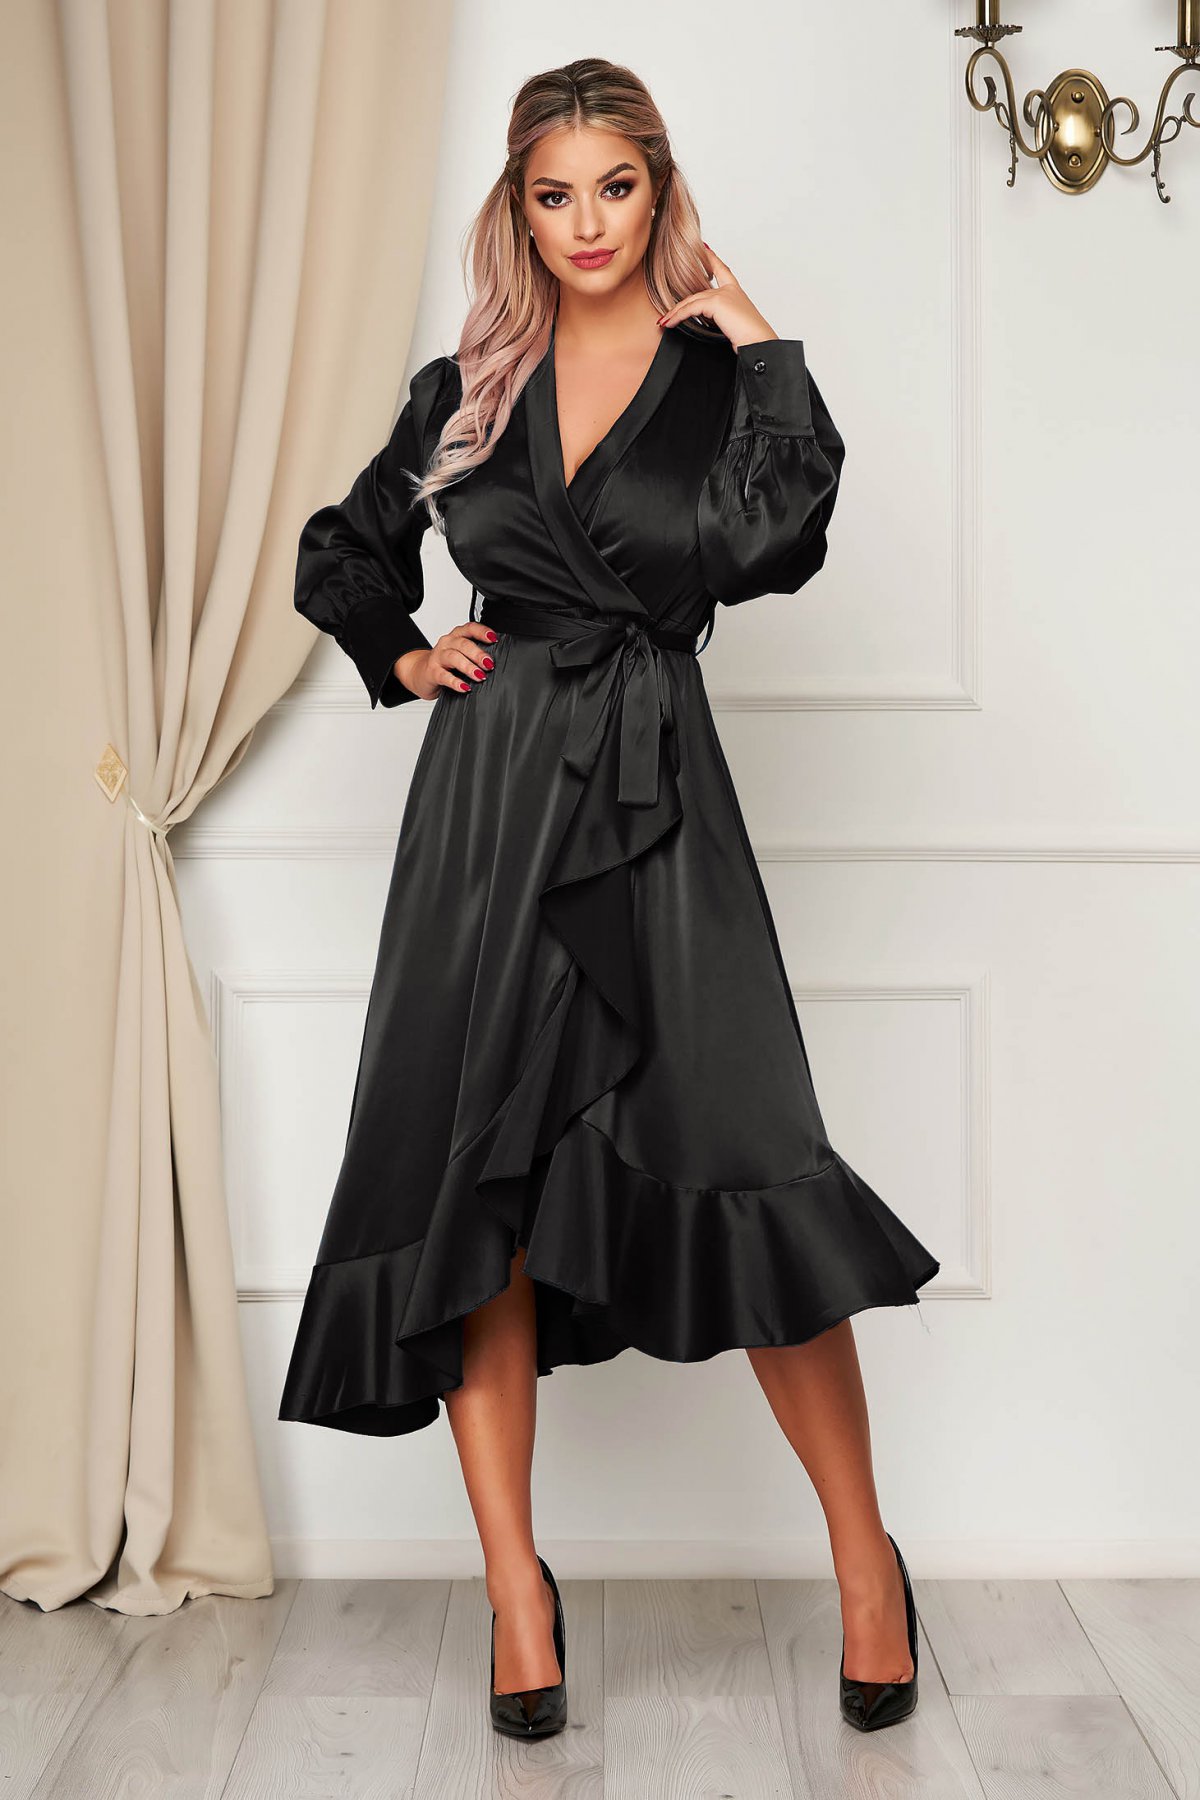 Rochie SunShine neagra eleganta in clos decolteu petrecut din material satinat cu volanase la baza rochiei accesorizata cu cordon